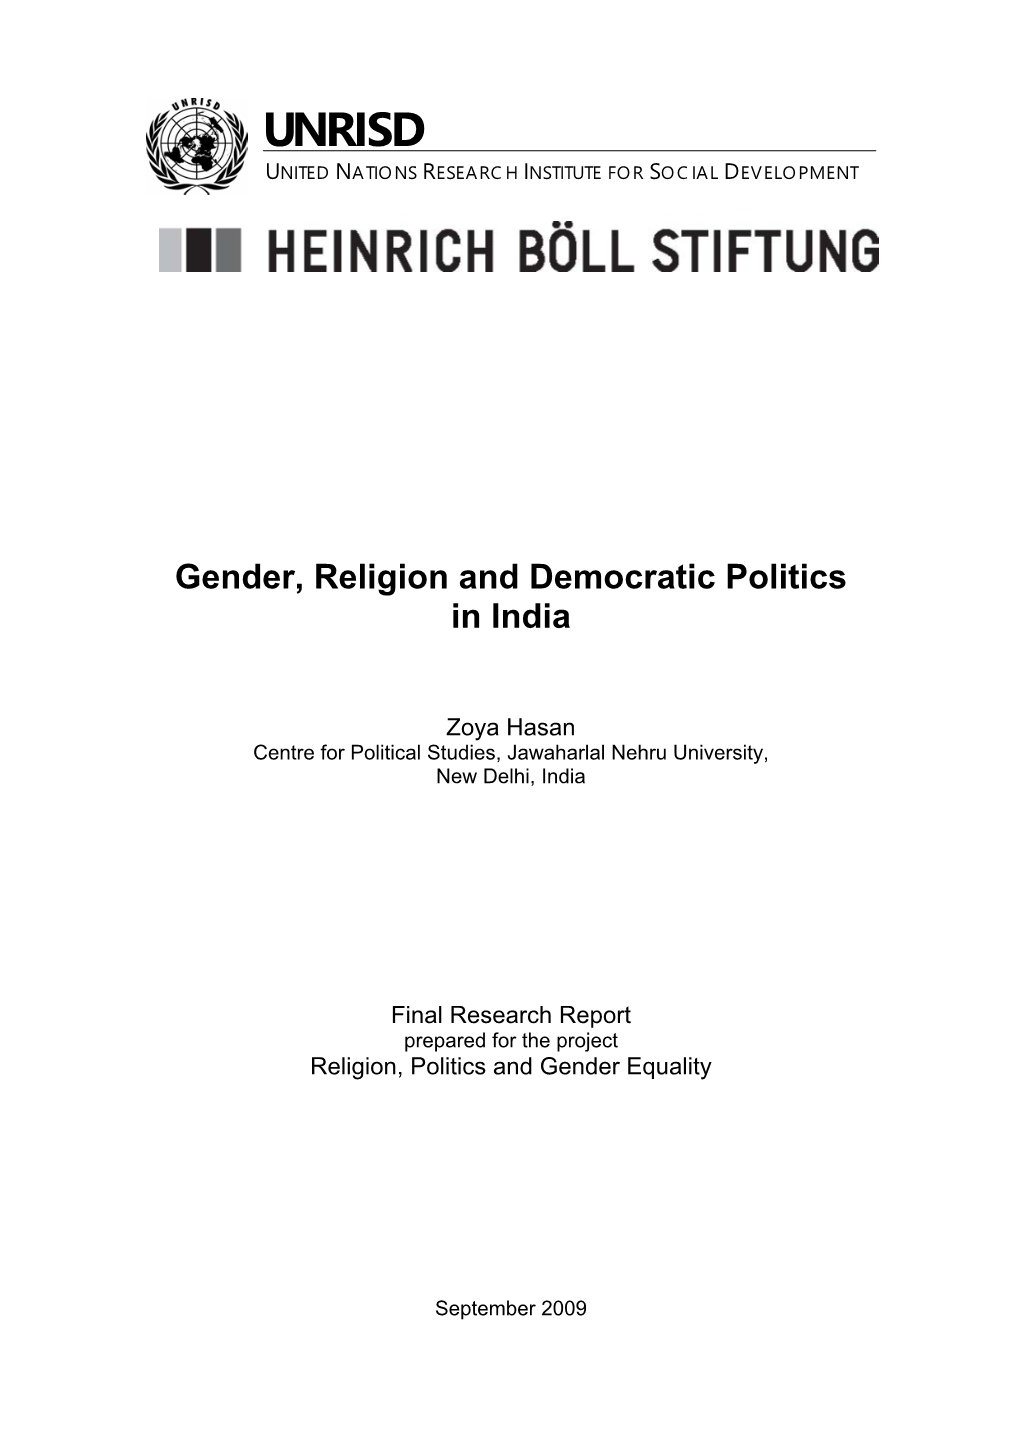 Gender, Religion and Democratic Politics in India